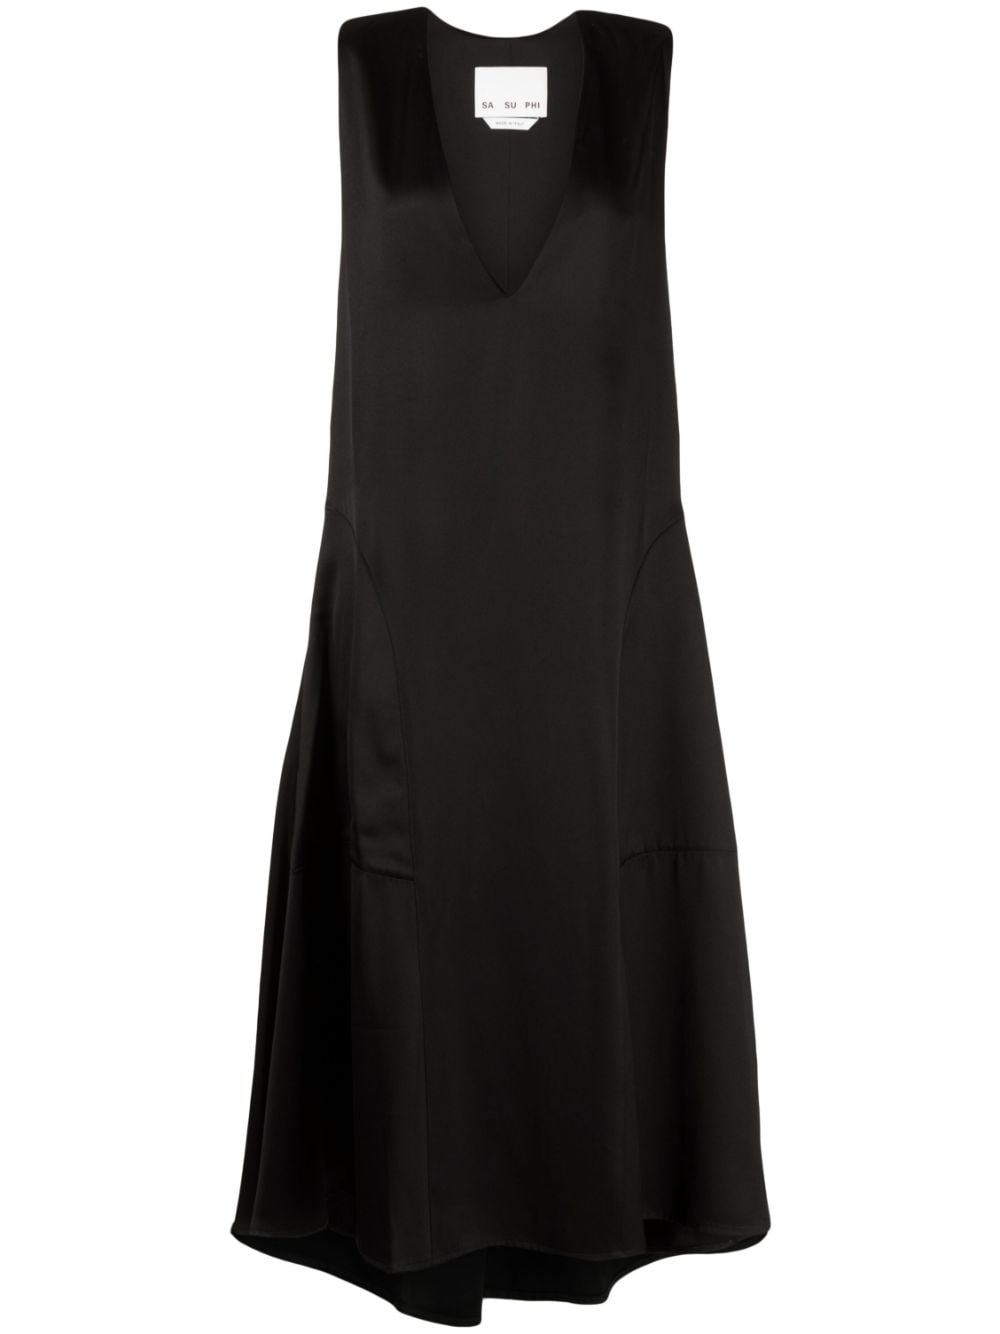 SA SU PHI V-neck sleeveless satin dress - Black von SA SU PHI